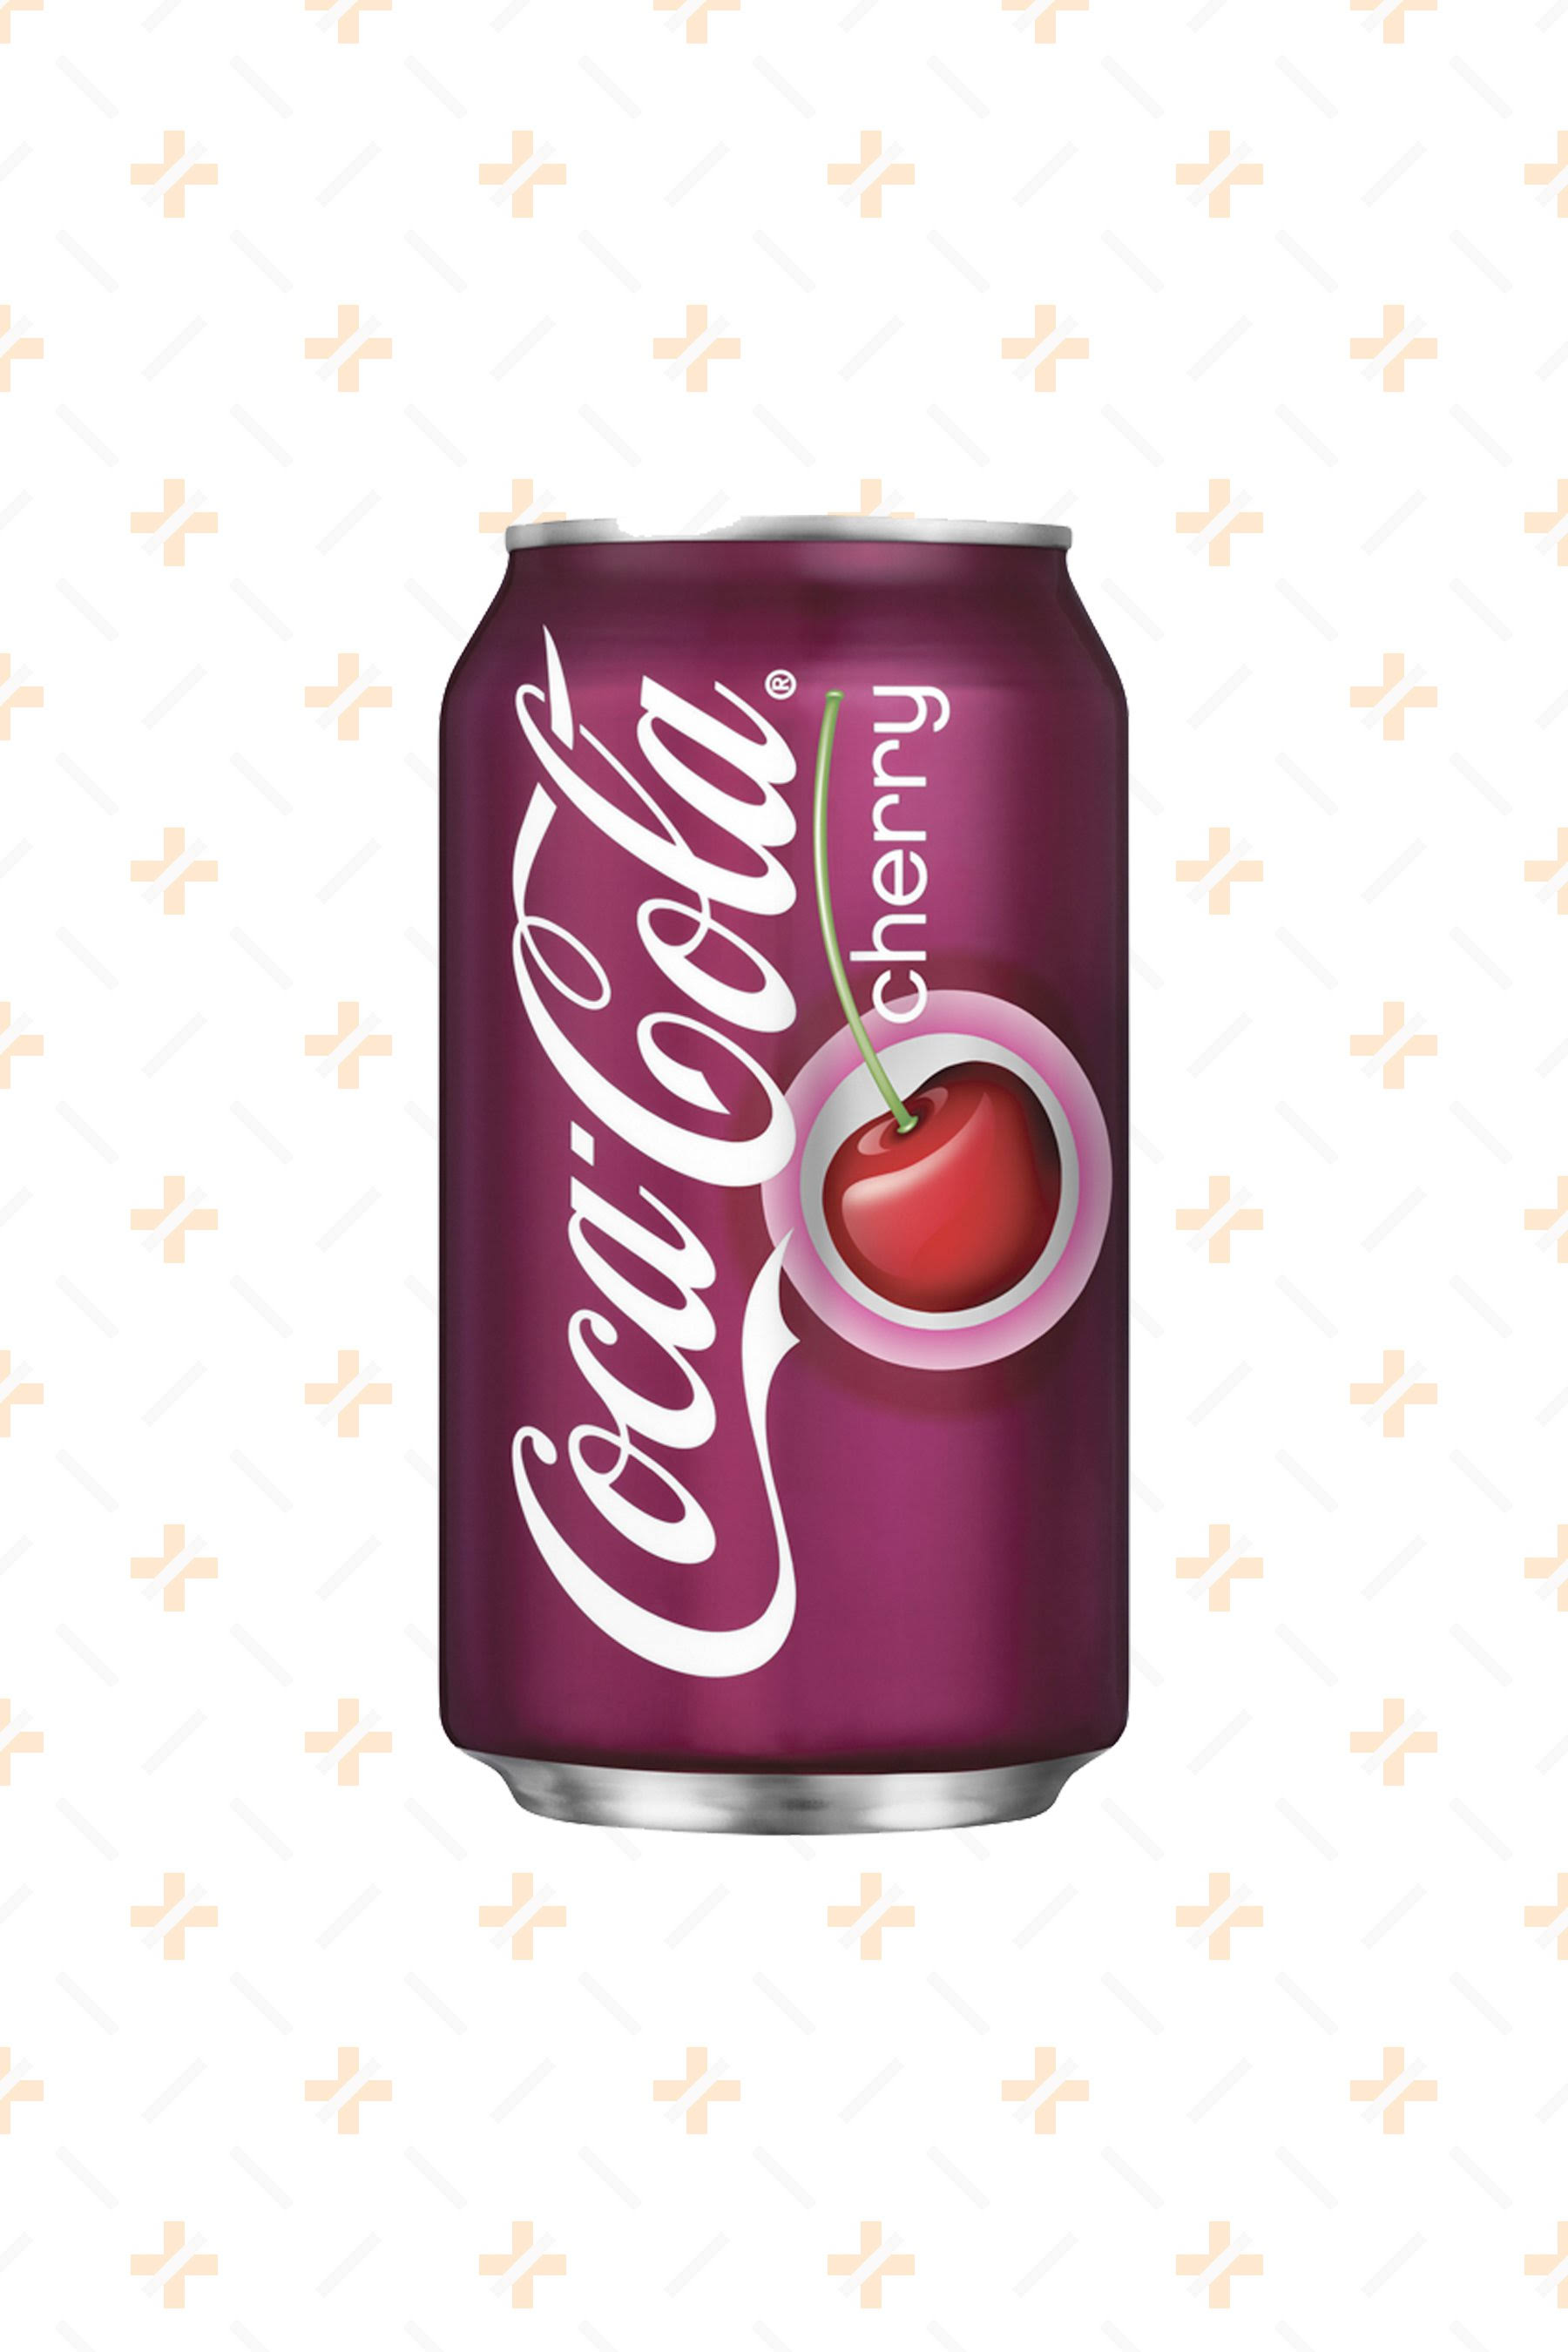 Coca Cola Cherry Soda - 12 Cans